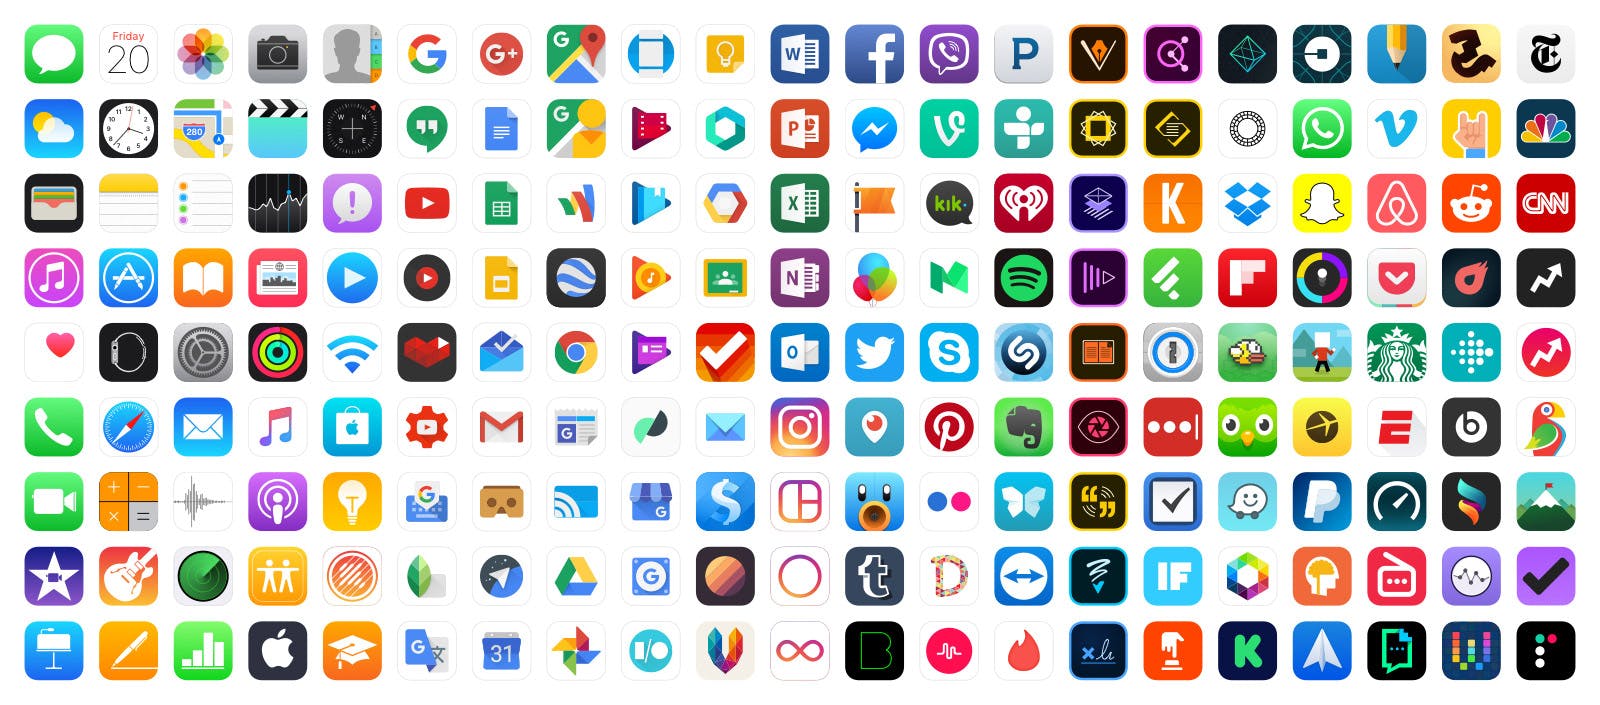 ultimate-app-icon-set-1.jpg